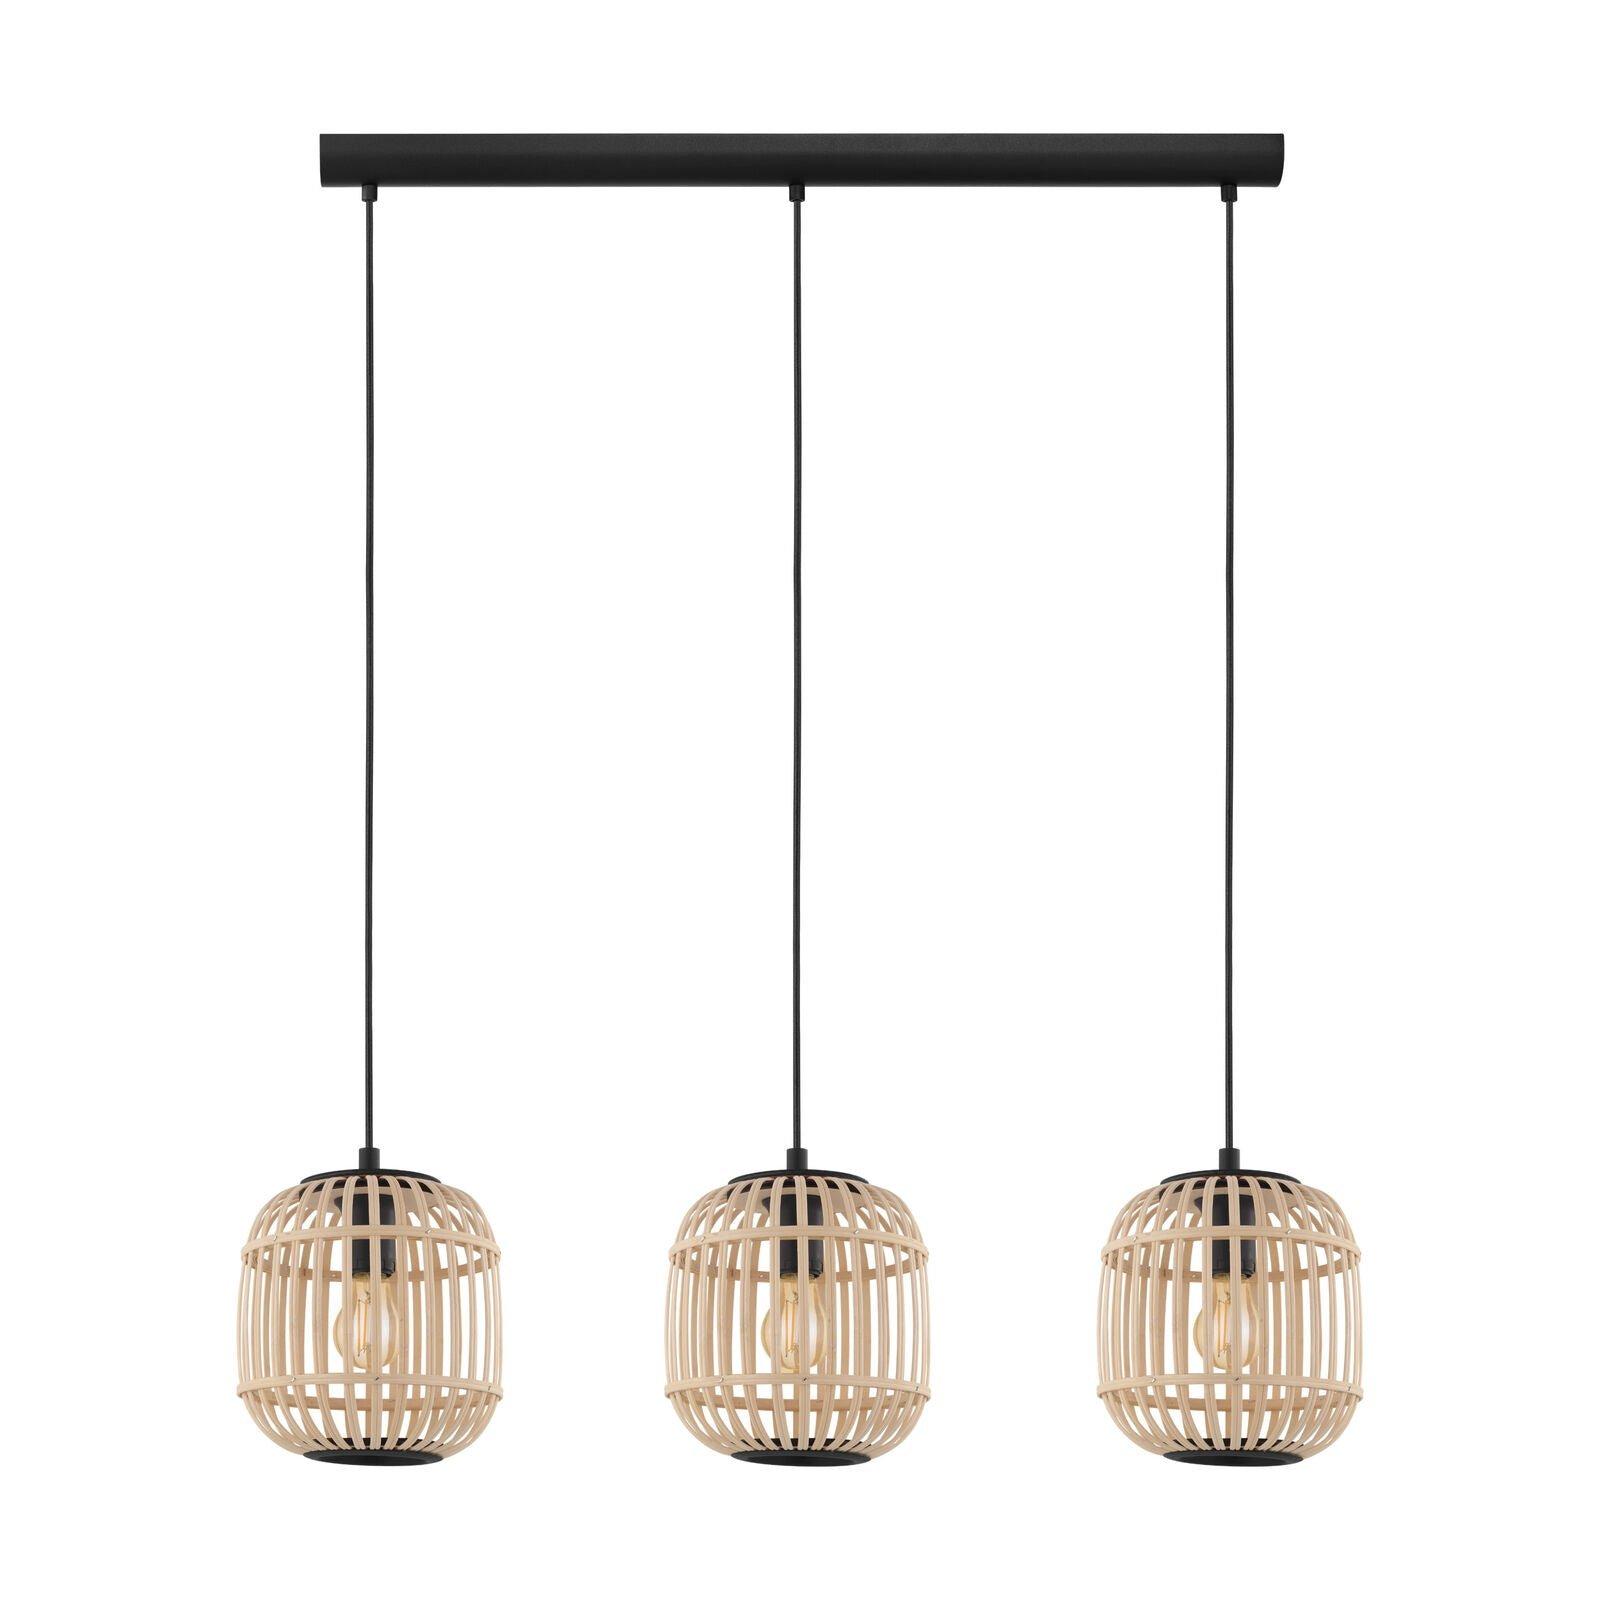 Hanging Ceiling Pendant Light Black & Wicker Cage 3 x 28W E27 Island Lamp